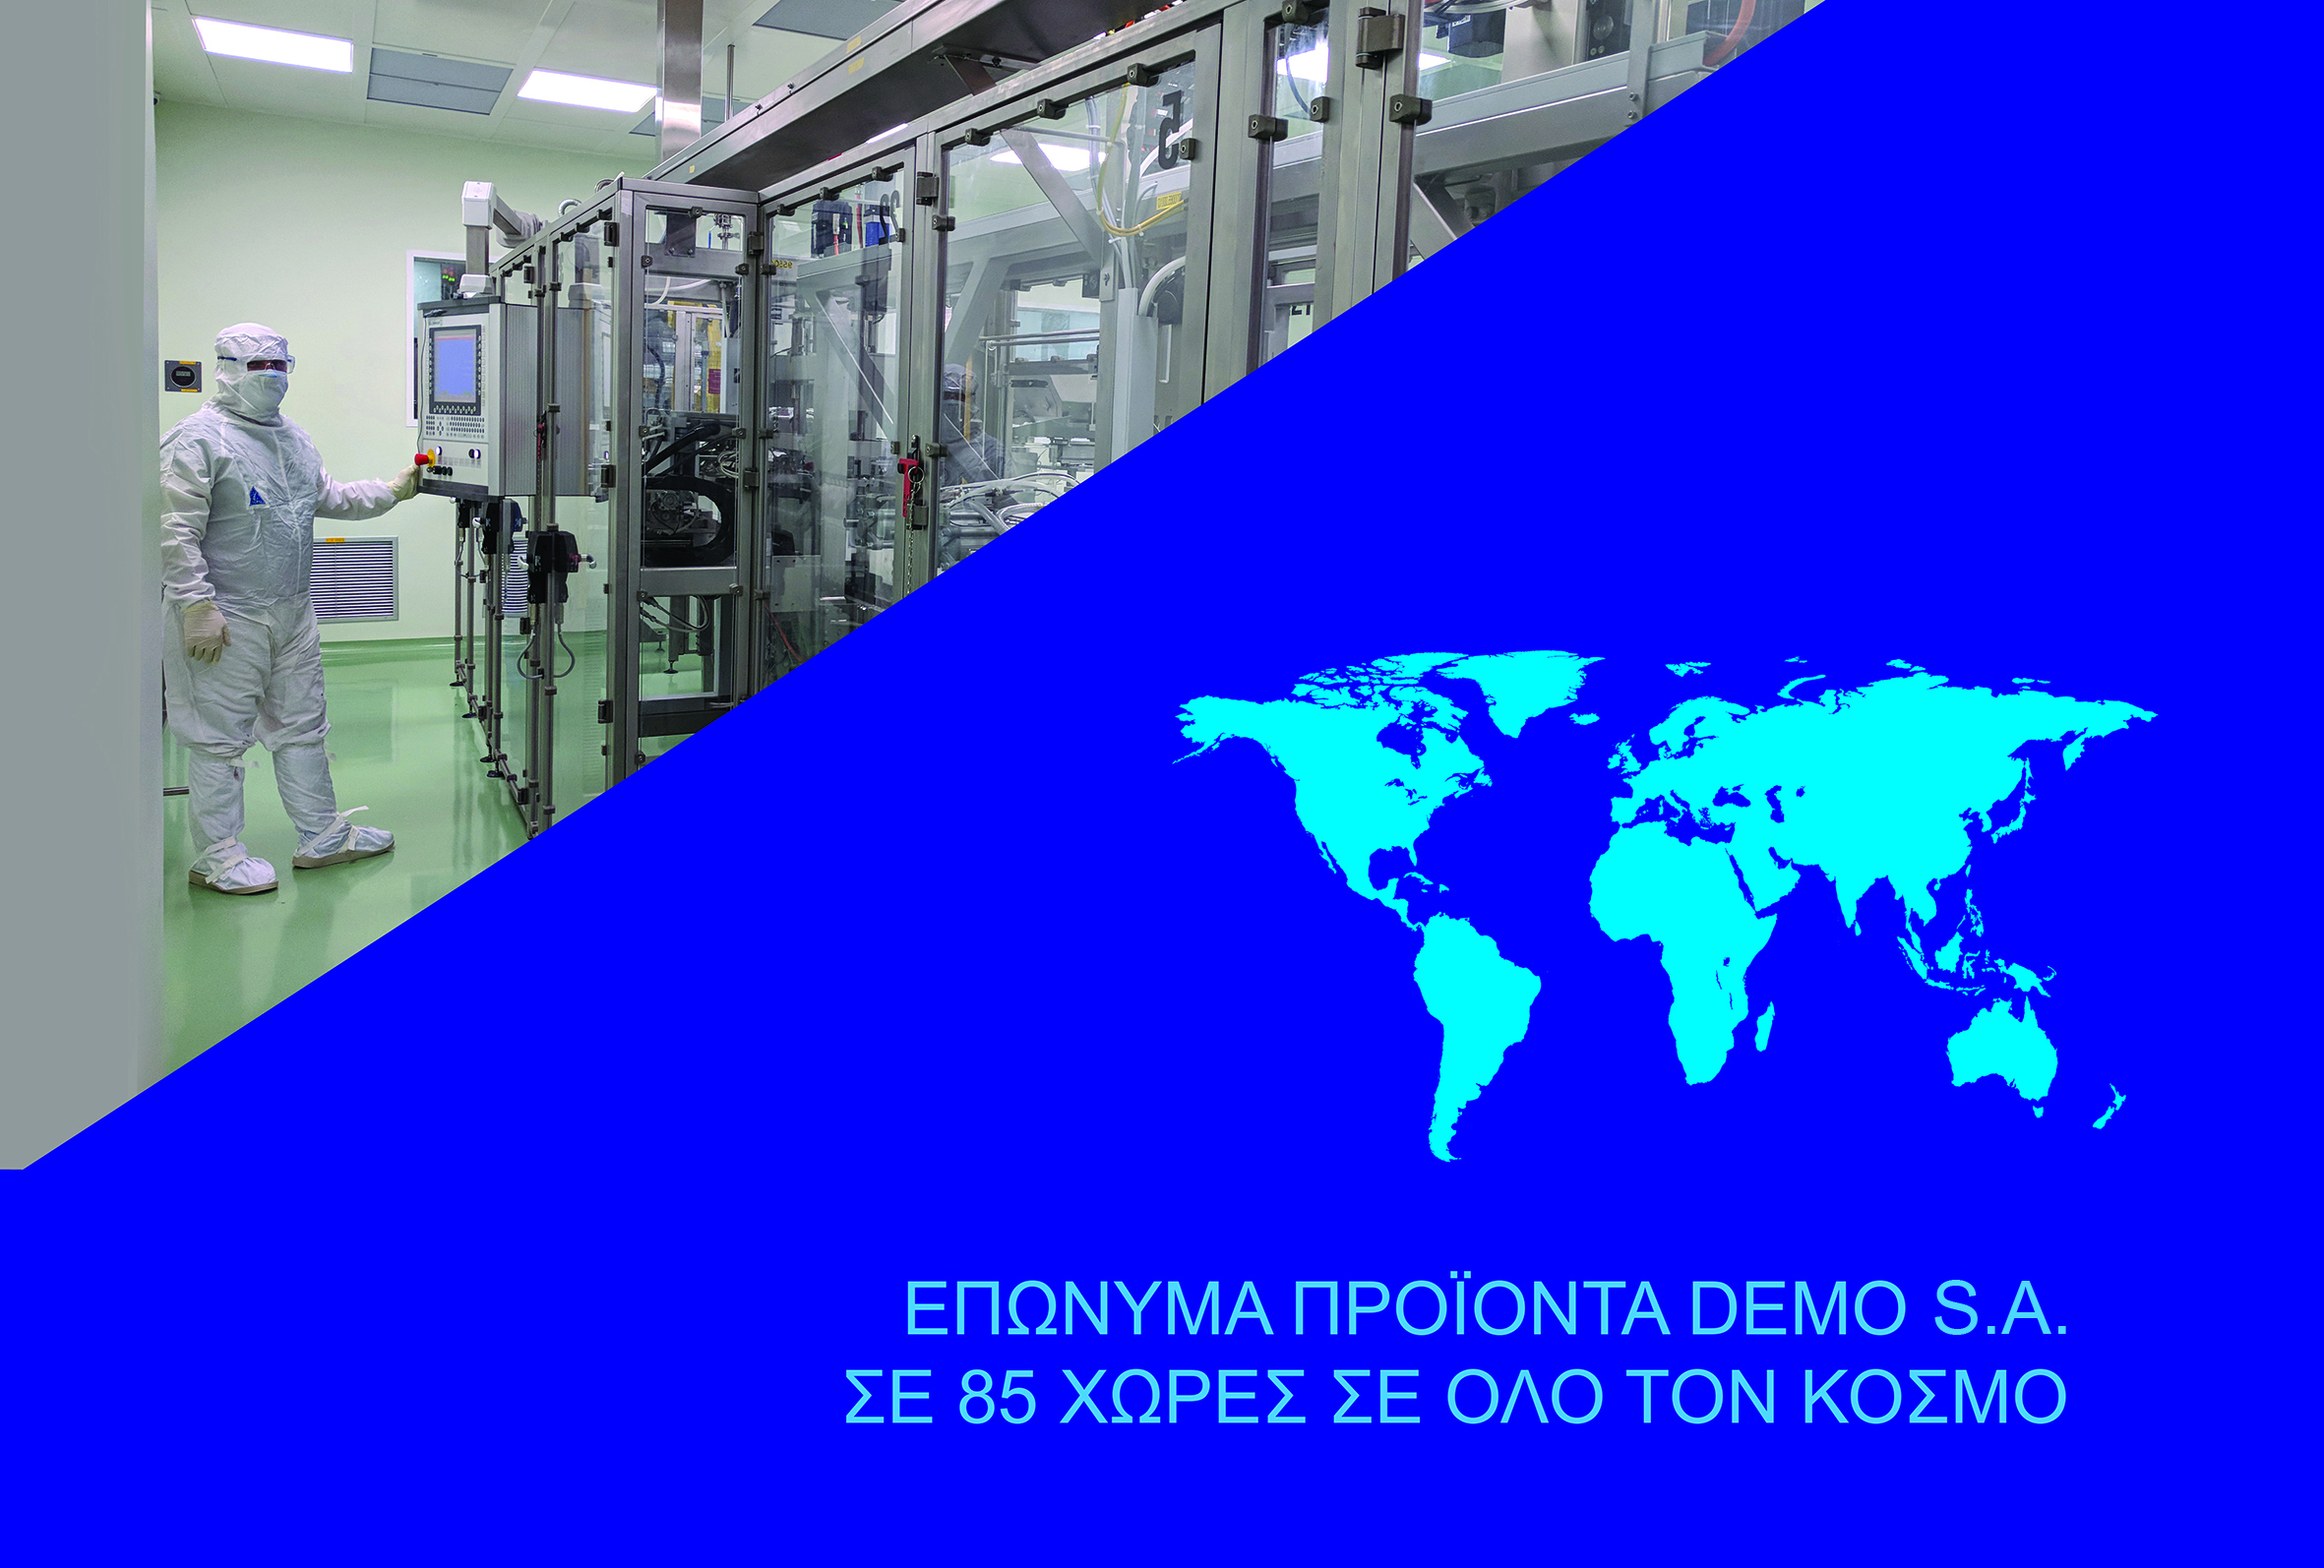 DEMO ABEE: Μια βιομηχανία που επενδύει στην Ελλάδα και έχει εξαγωγικό προσανατολισμό